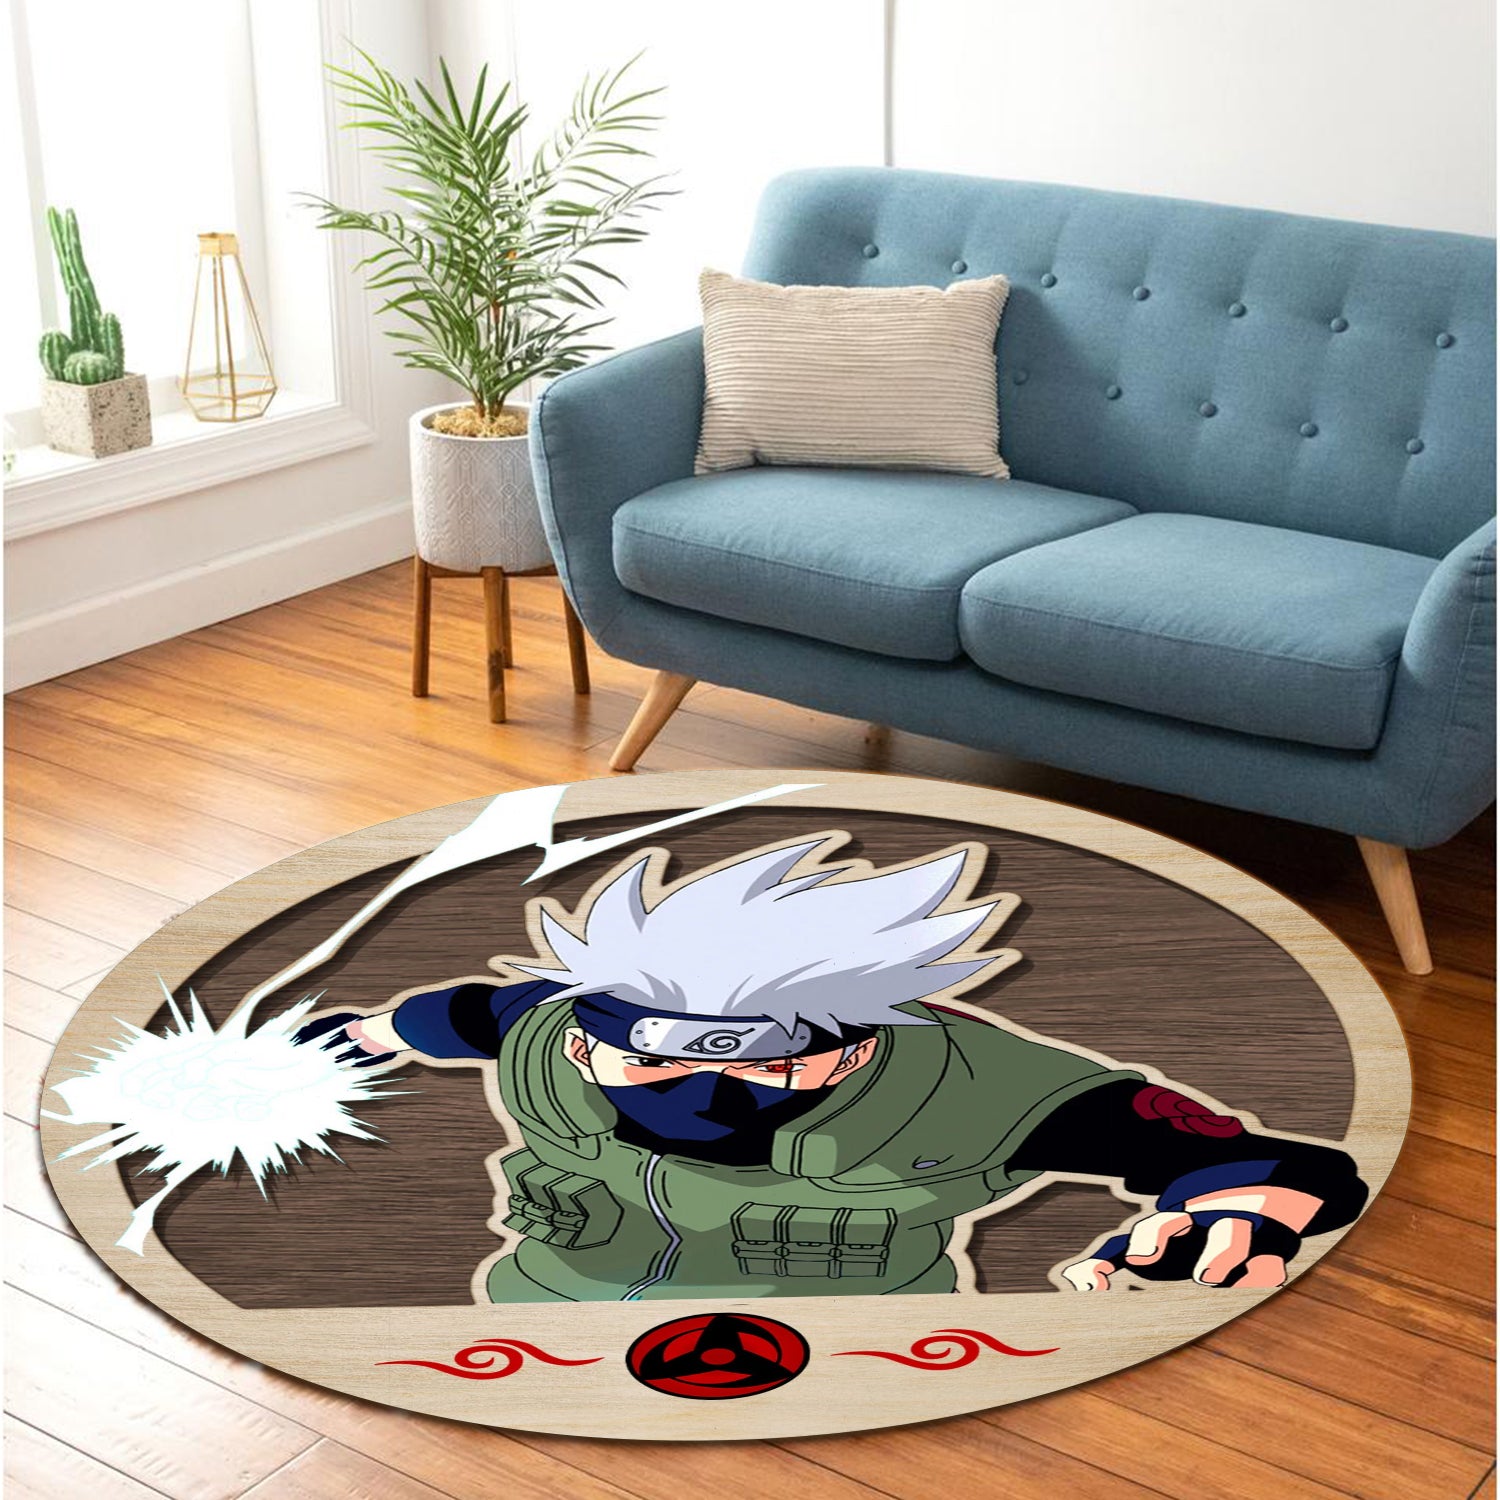 Naruto Hatake Kakashi Round Carpet Rug Bedroom Livingroom Home Decor Nearkii